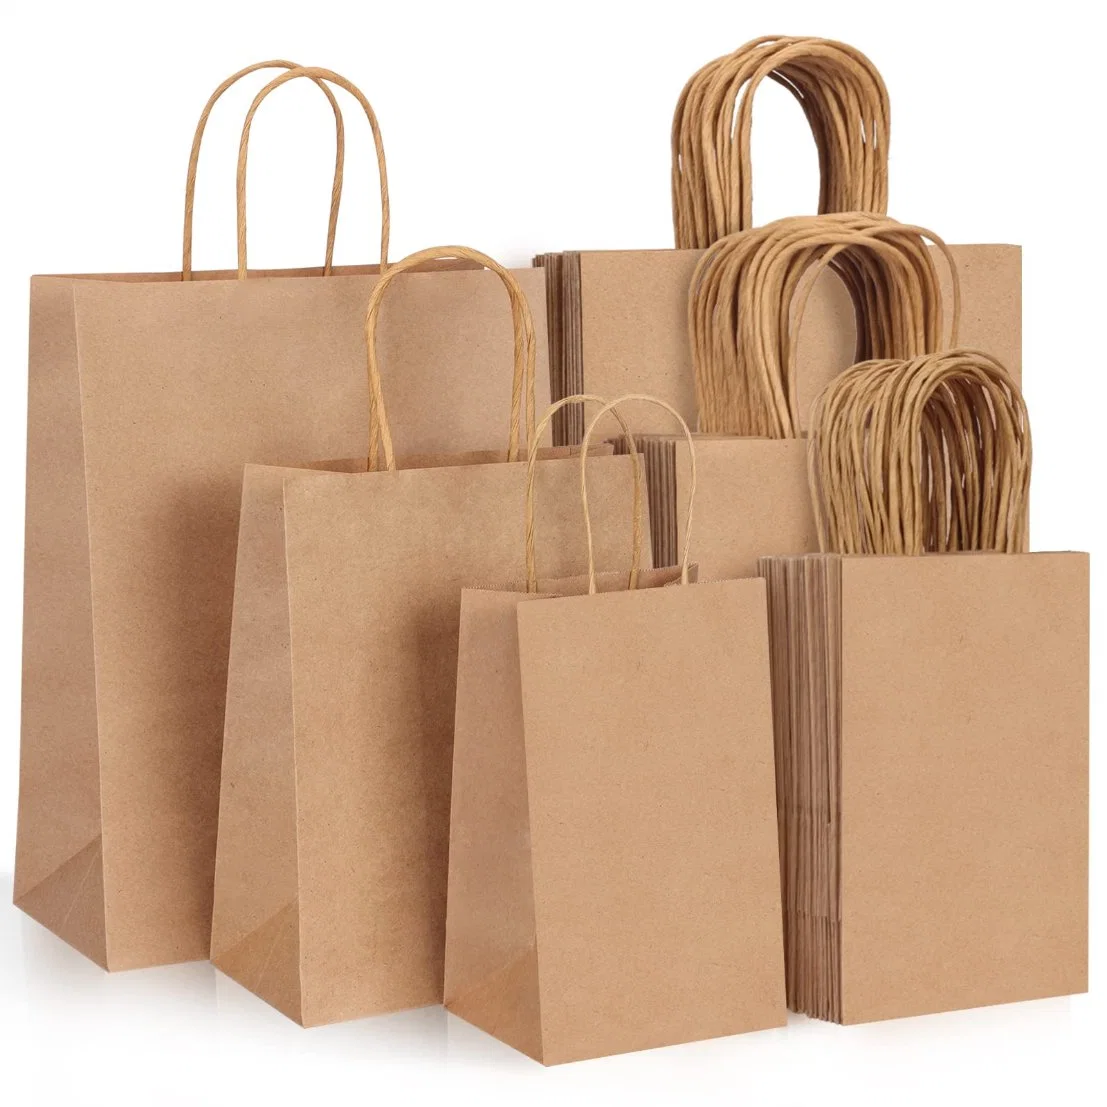 Llanura pequeñas bolsas de regalo papel natural con asas a granel, bolsas Kraft para cumpleaños Cotillón Tiendas de Comestibles bolsas Goody de negocios